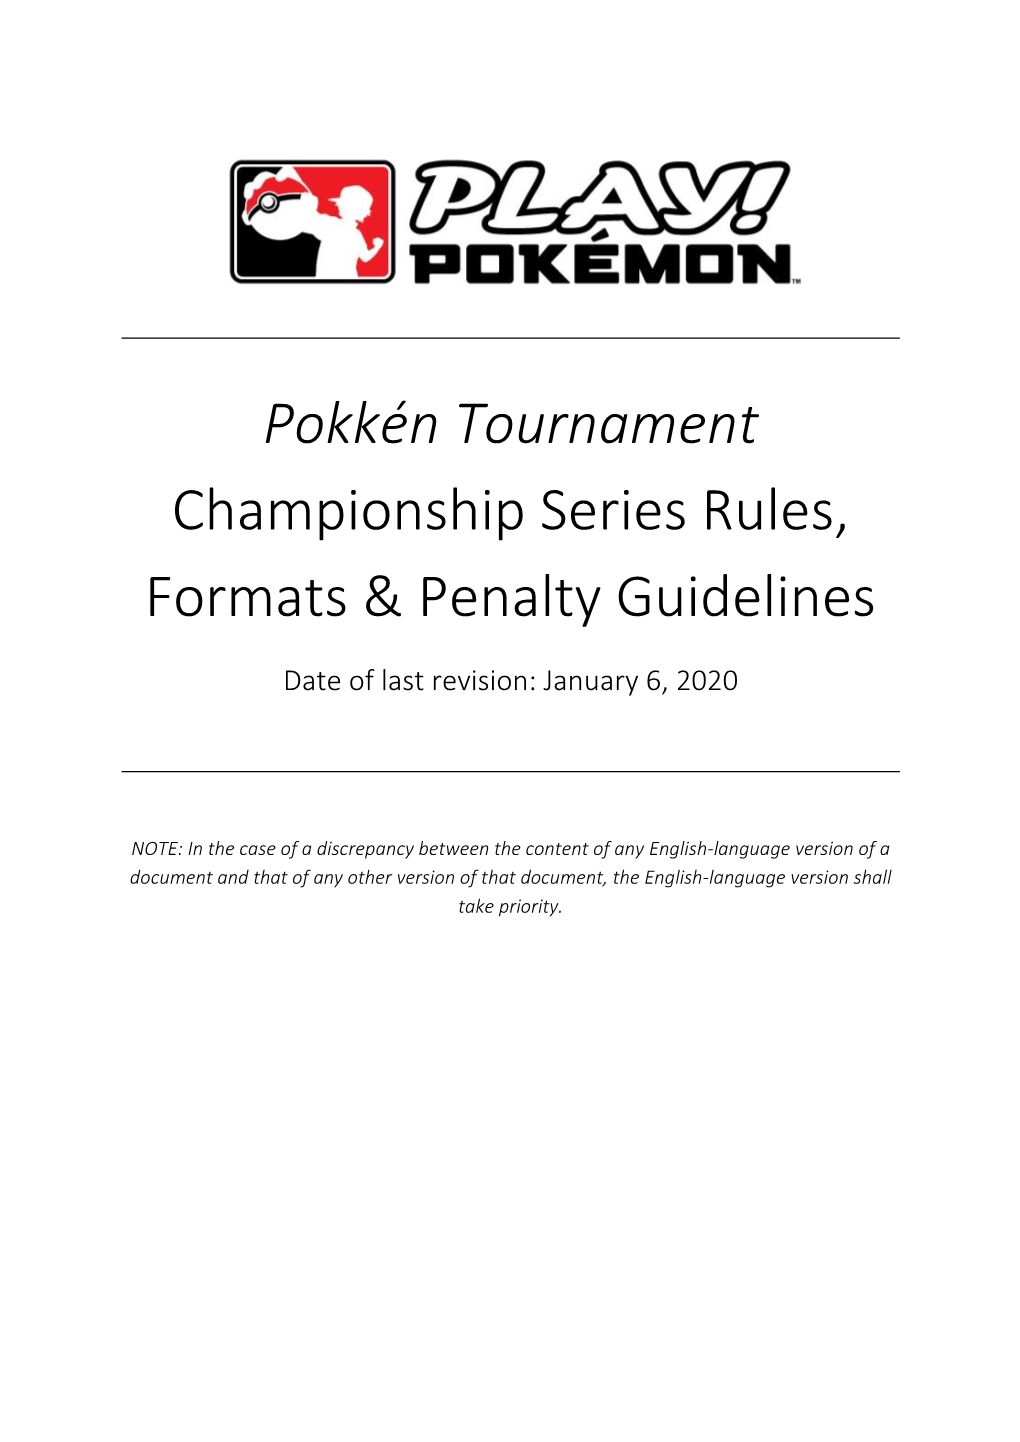 Play! Pokémon Pokkén Tournament Championships Series Rules